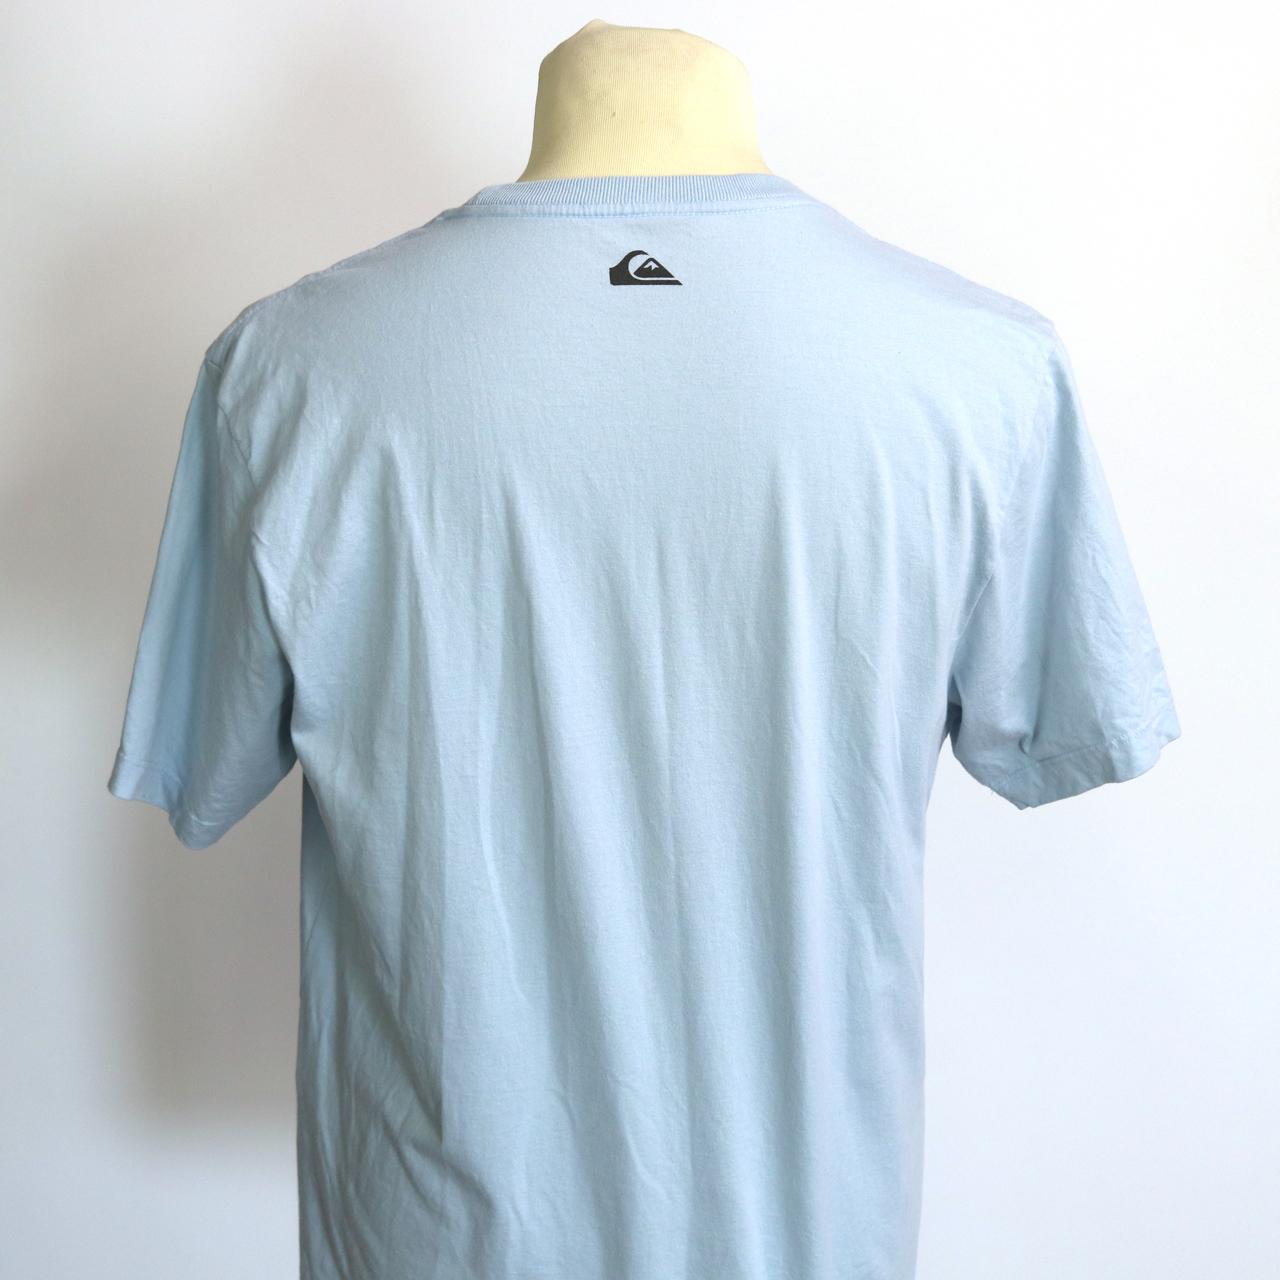 Quiksilver Men's Blue and Grey T-shirt (4)